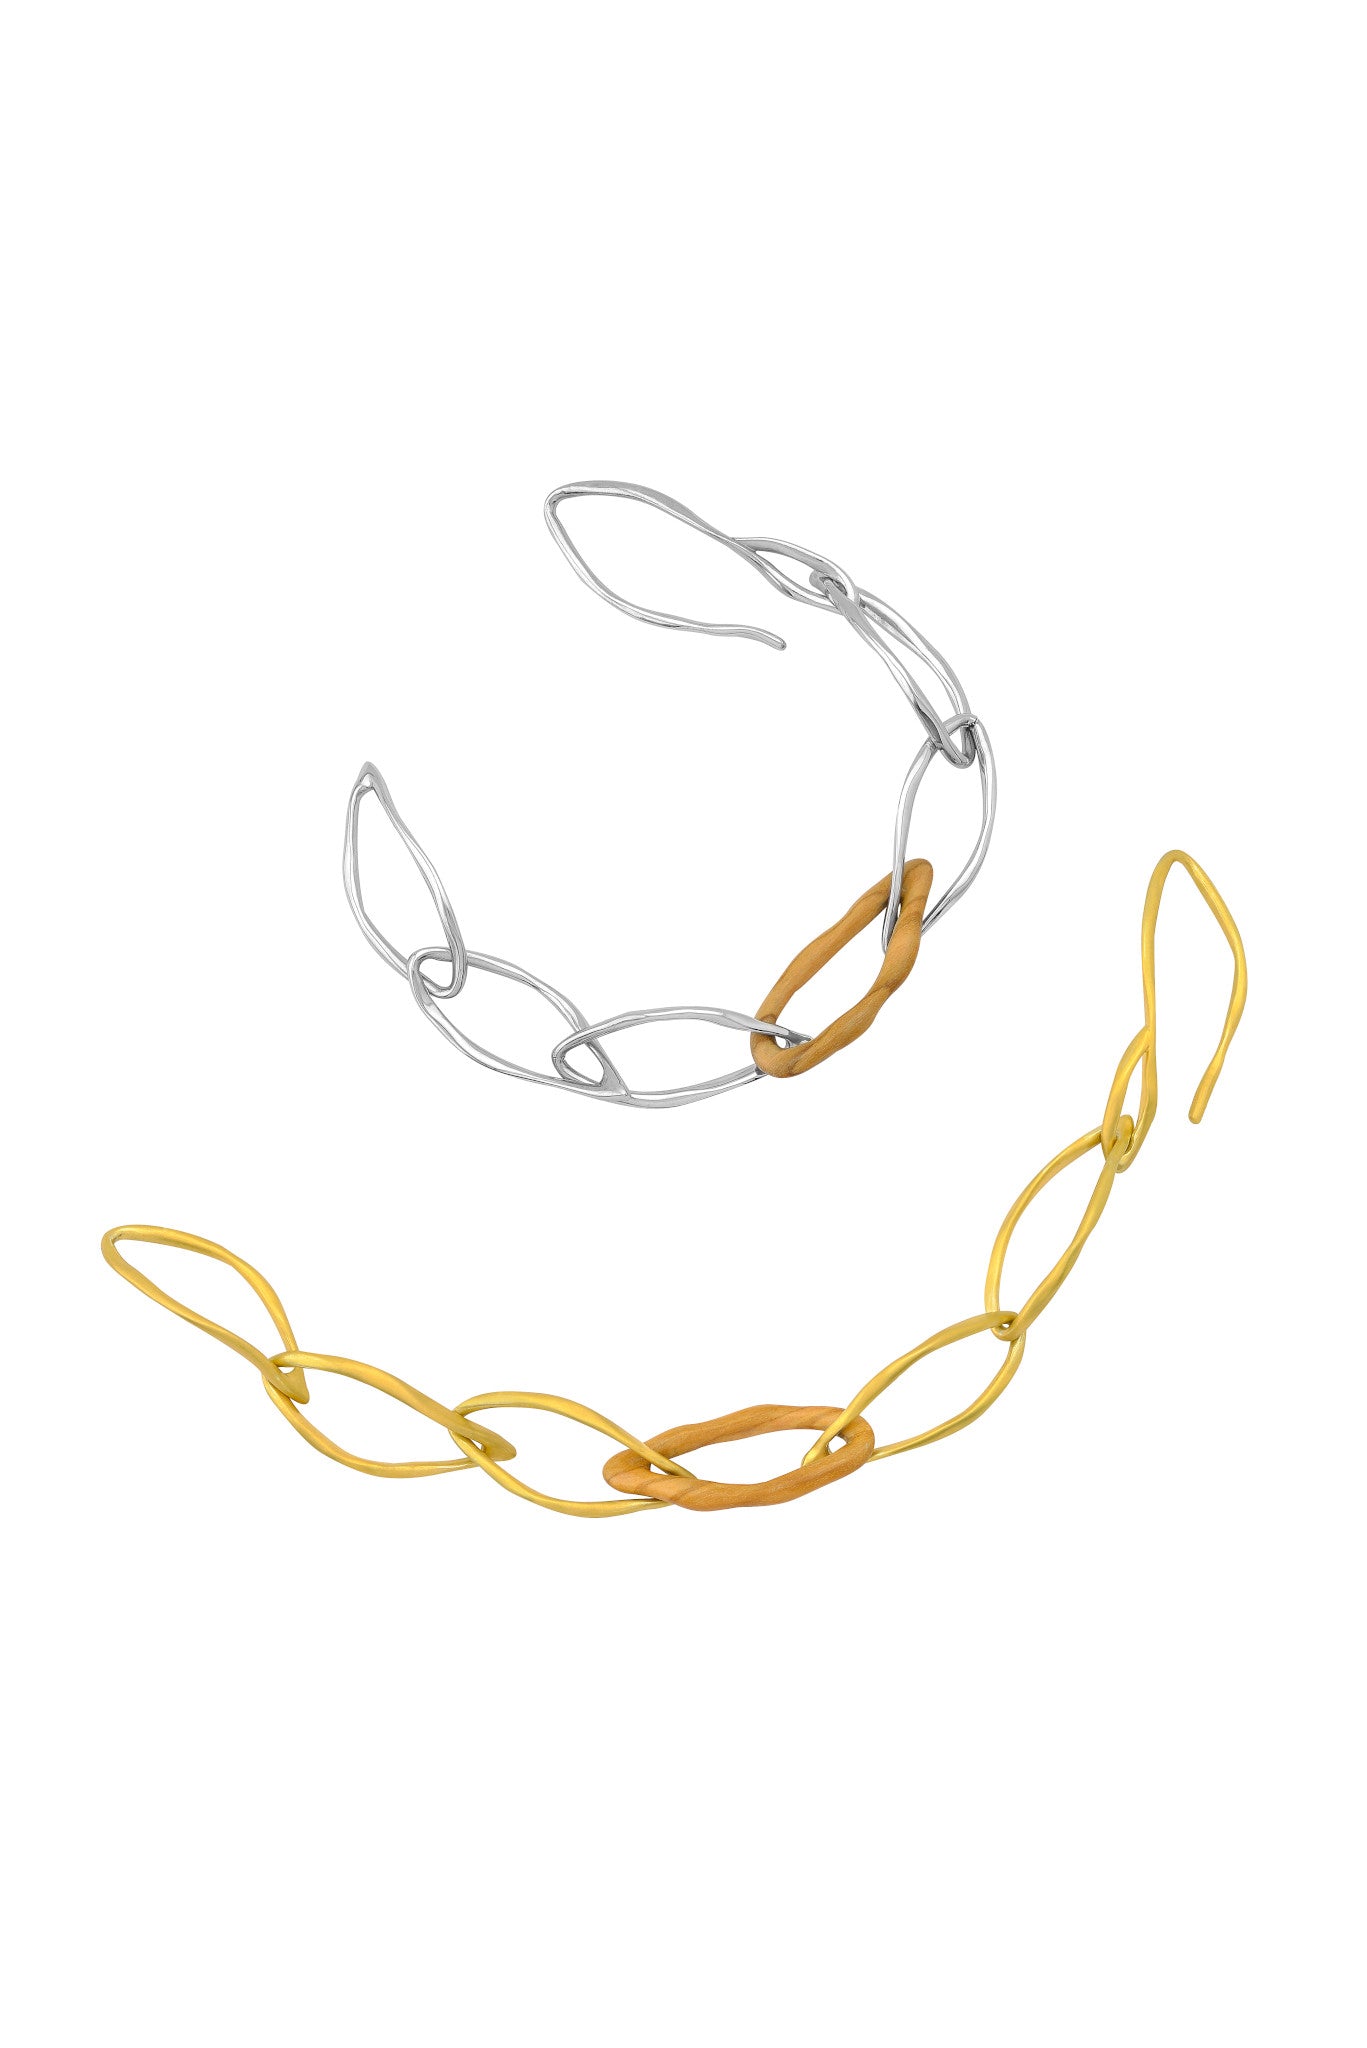 Stala Olive Wood Chain Bracelet 22 cm